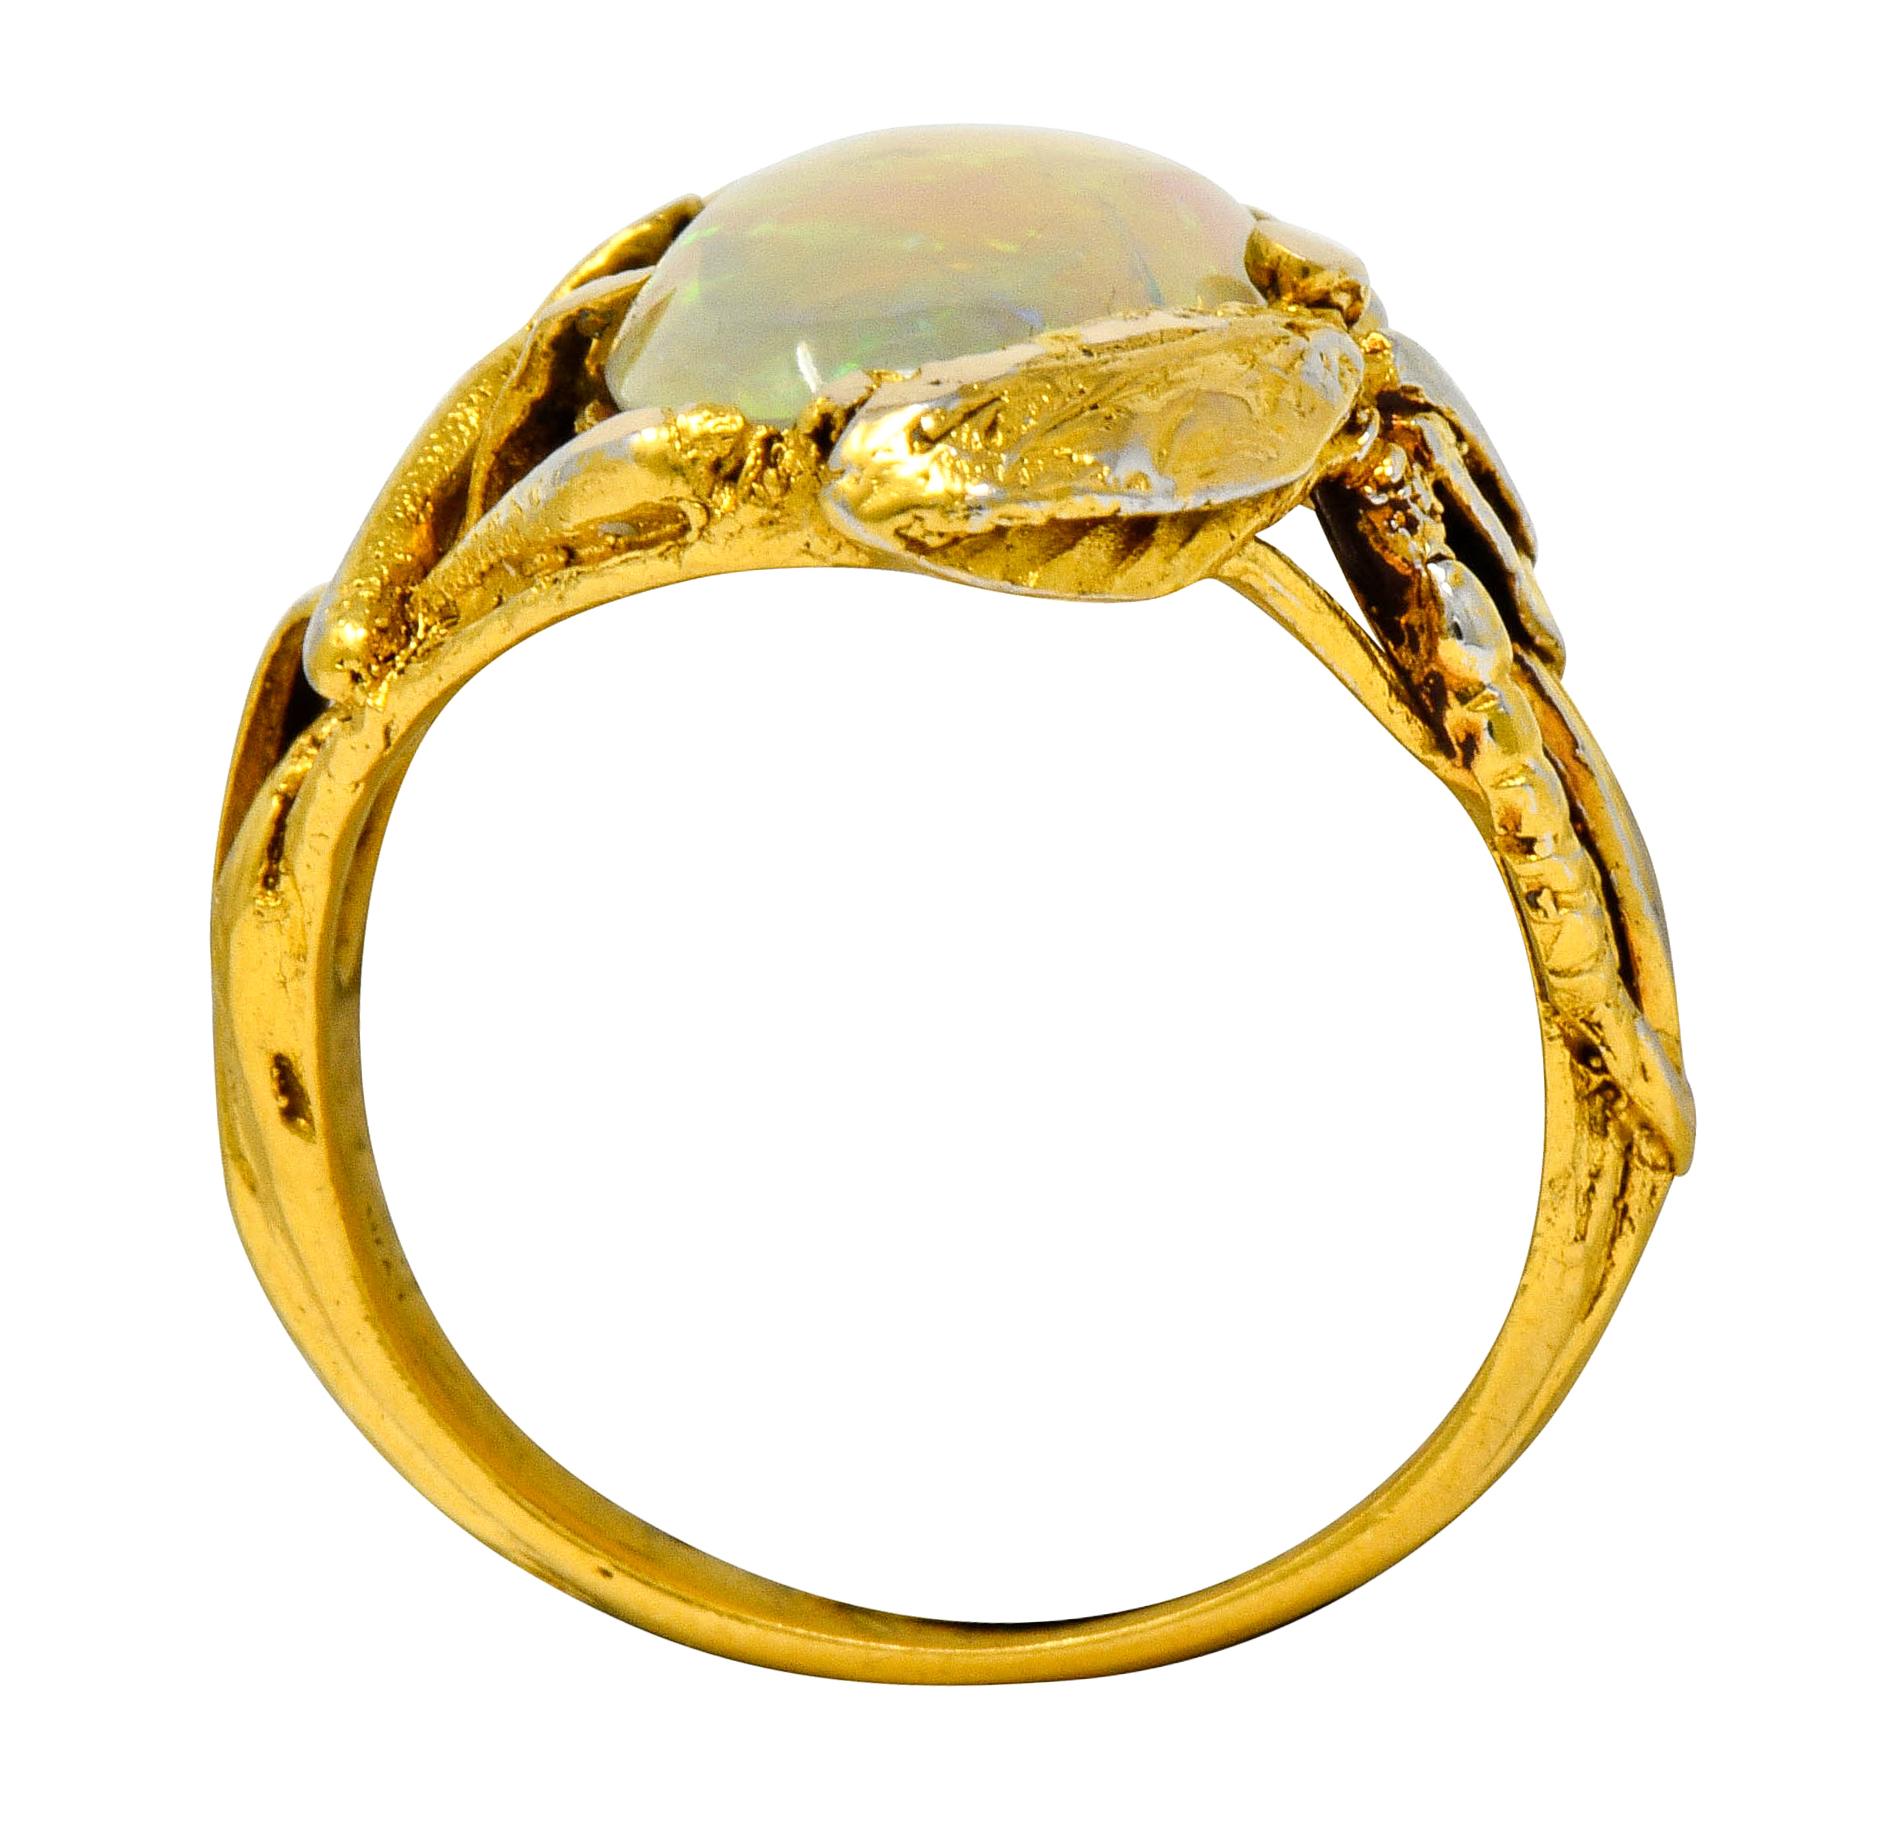 Walton & Co. Arts & Crafts Opal 14 Karat Gold Dragonfly Ring 1